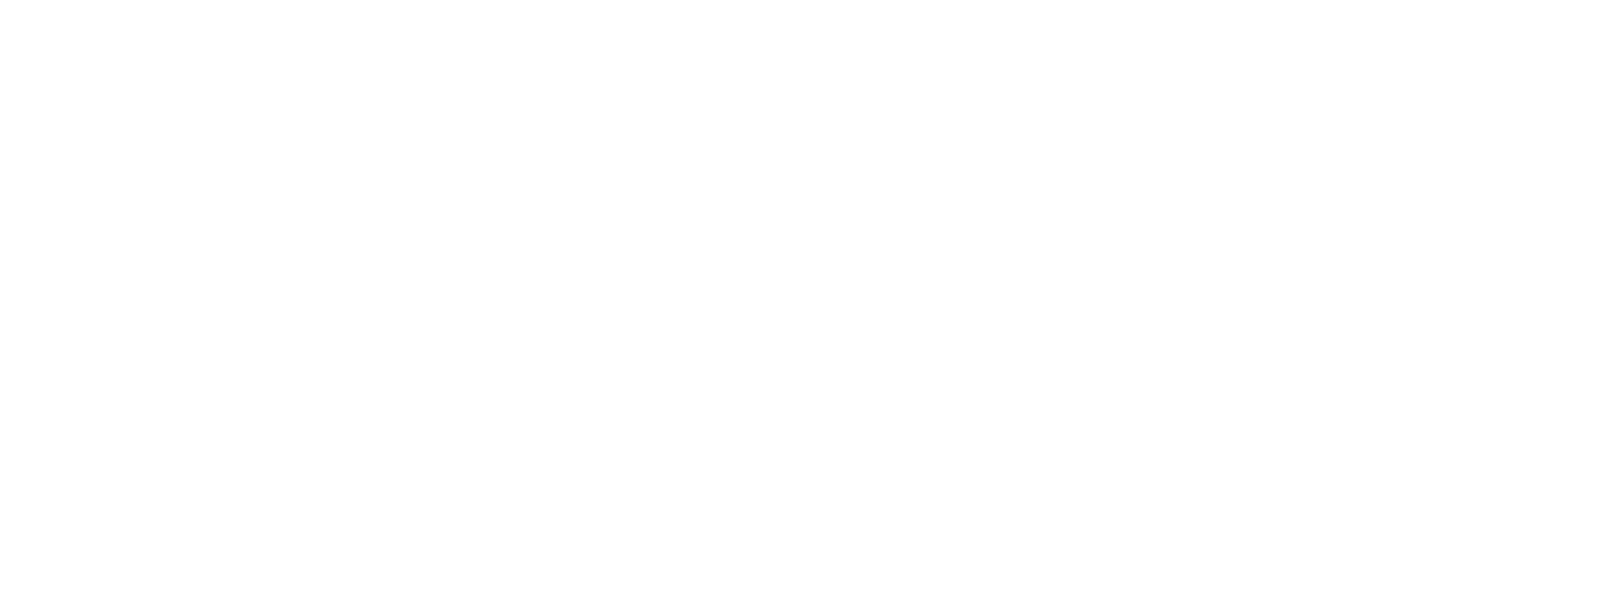 leafnote_logo_white(preferred).png